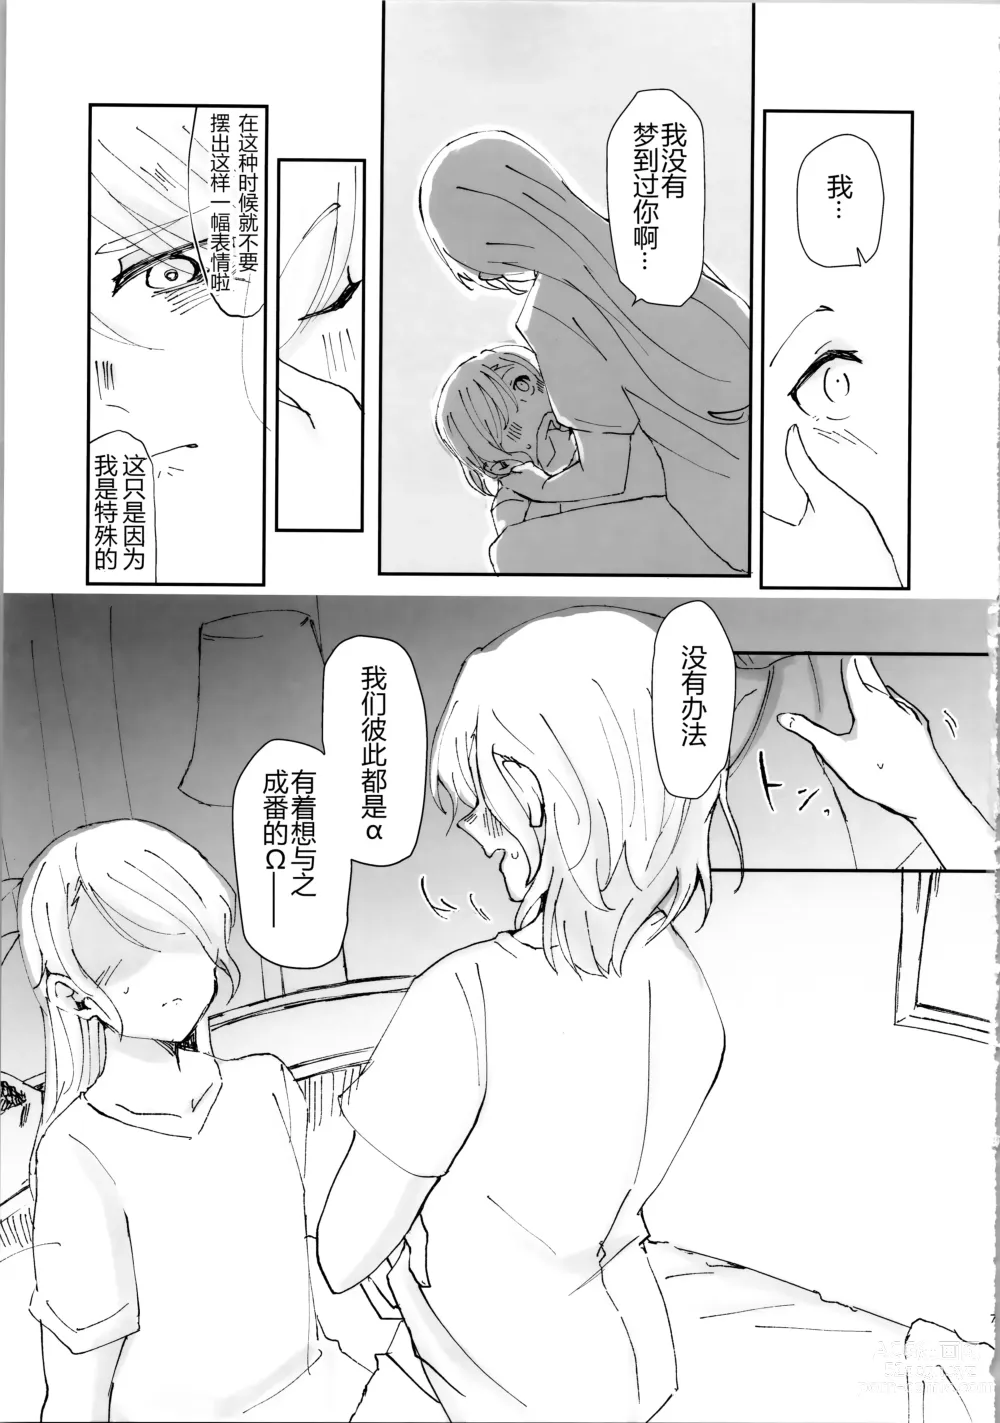 Page 7 of doujinshi 只要爱着彼此就好